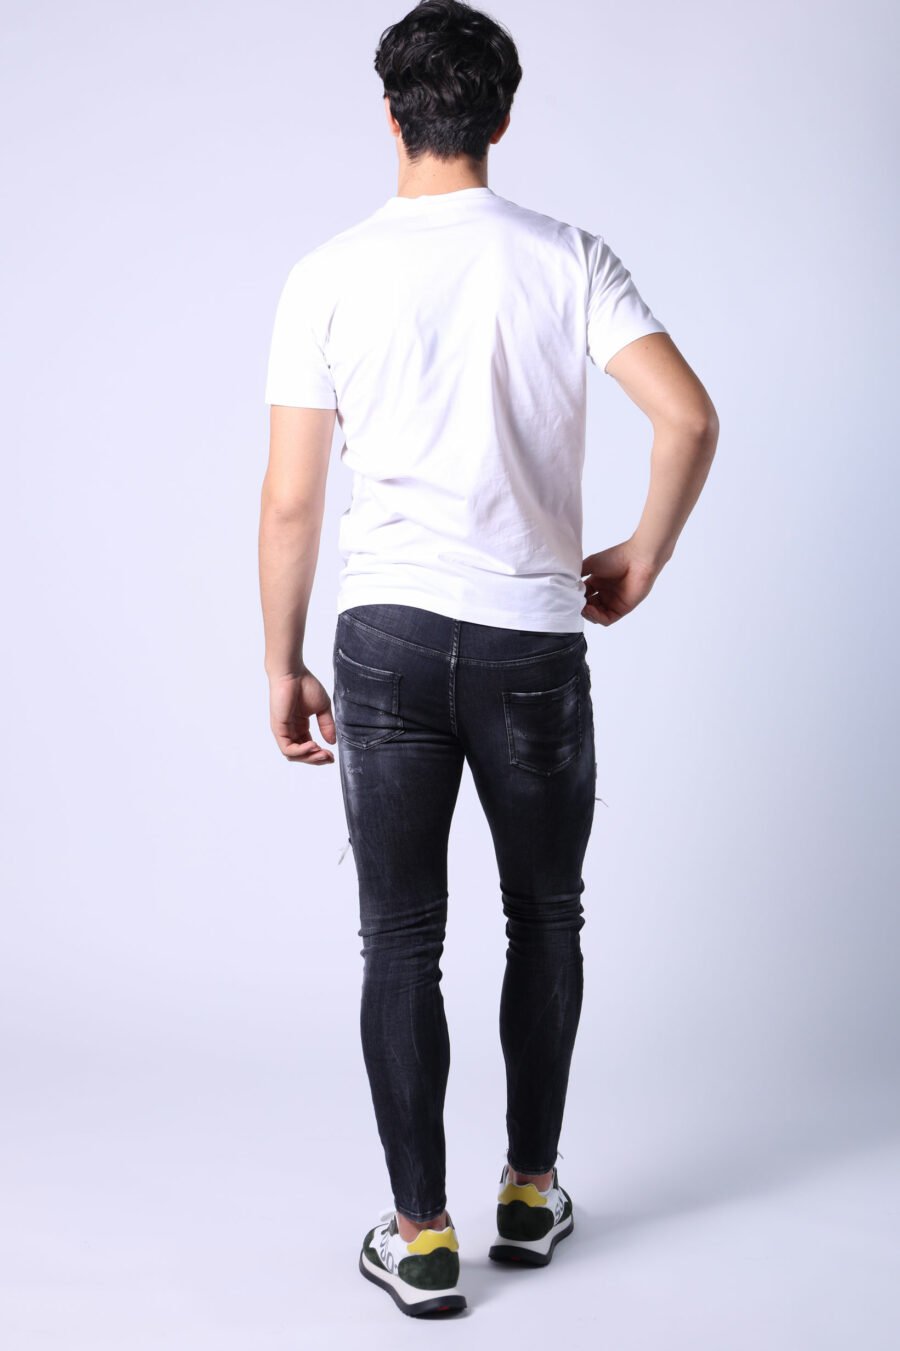 Denim trousers "super twinkey jean" black semi-worn and ripped - Untitled Catalog 05317